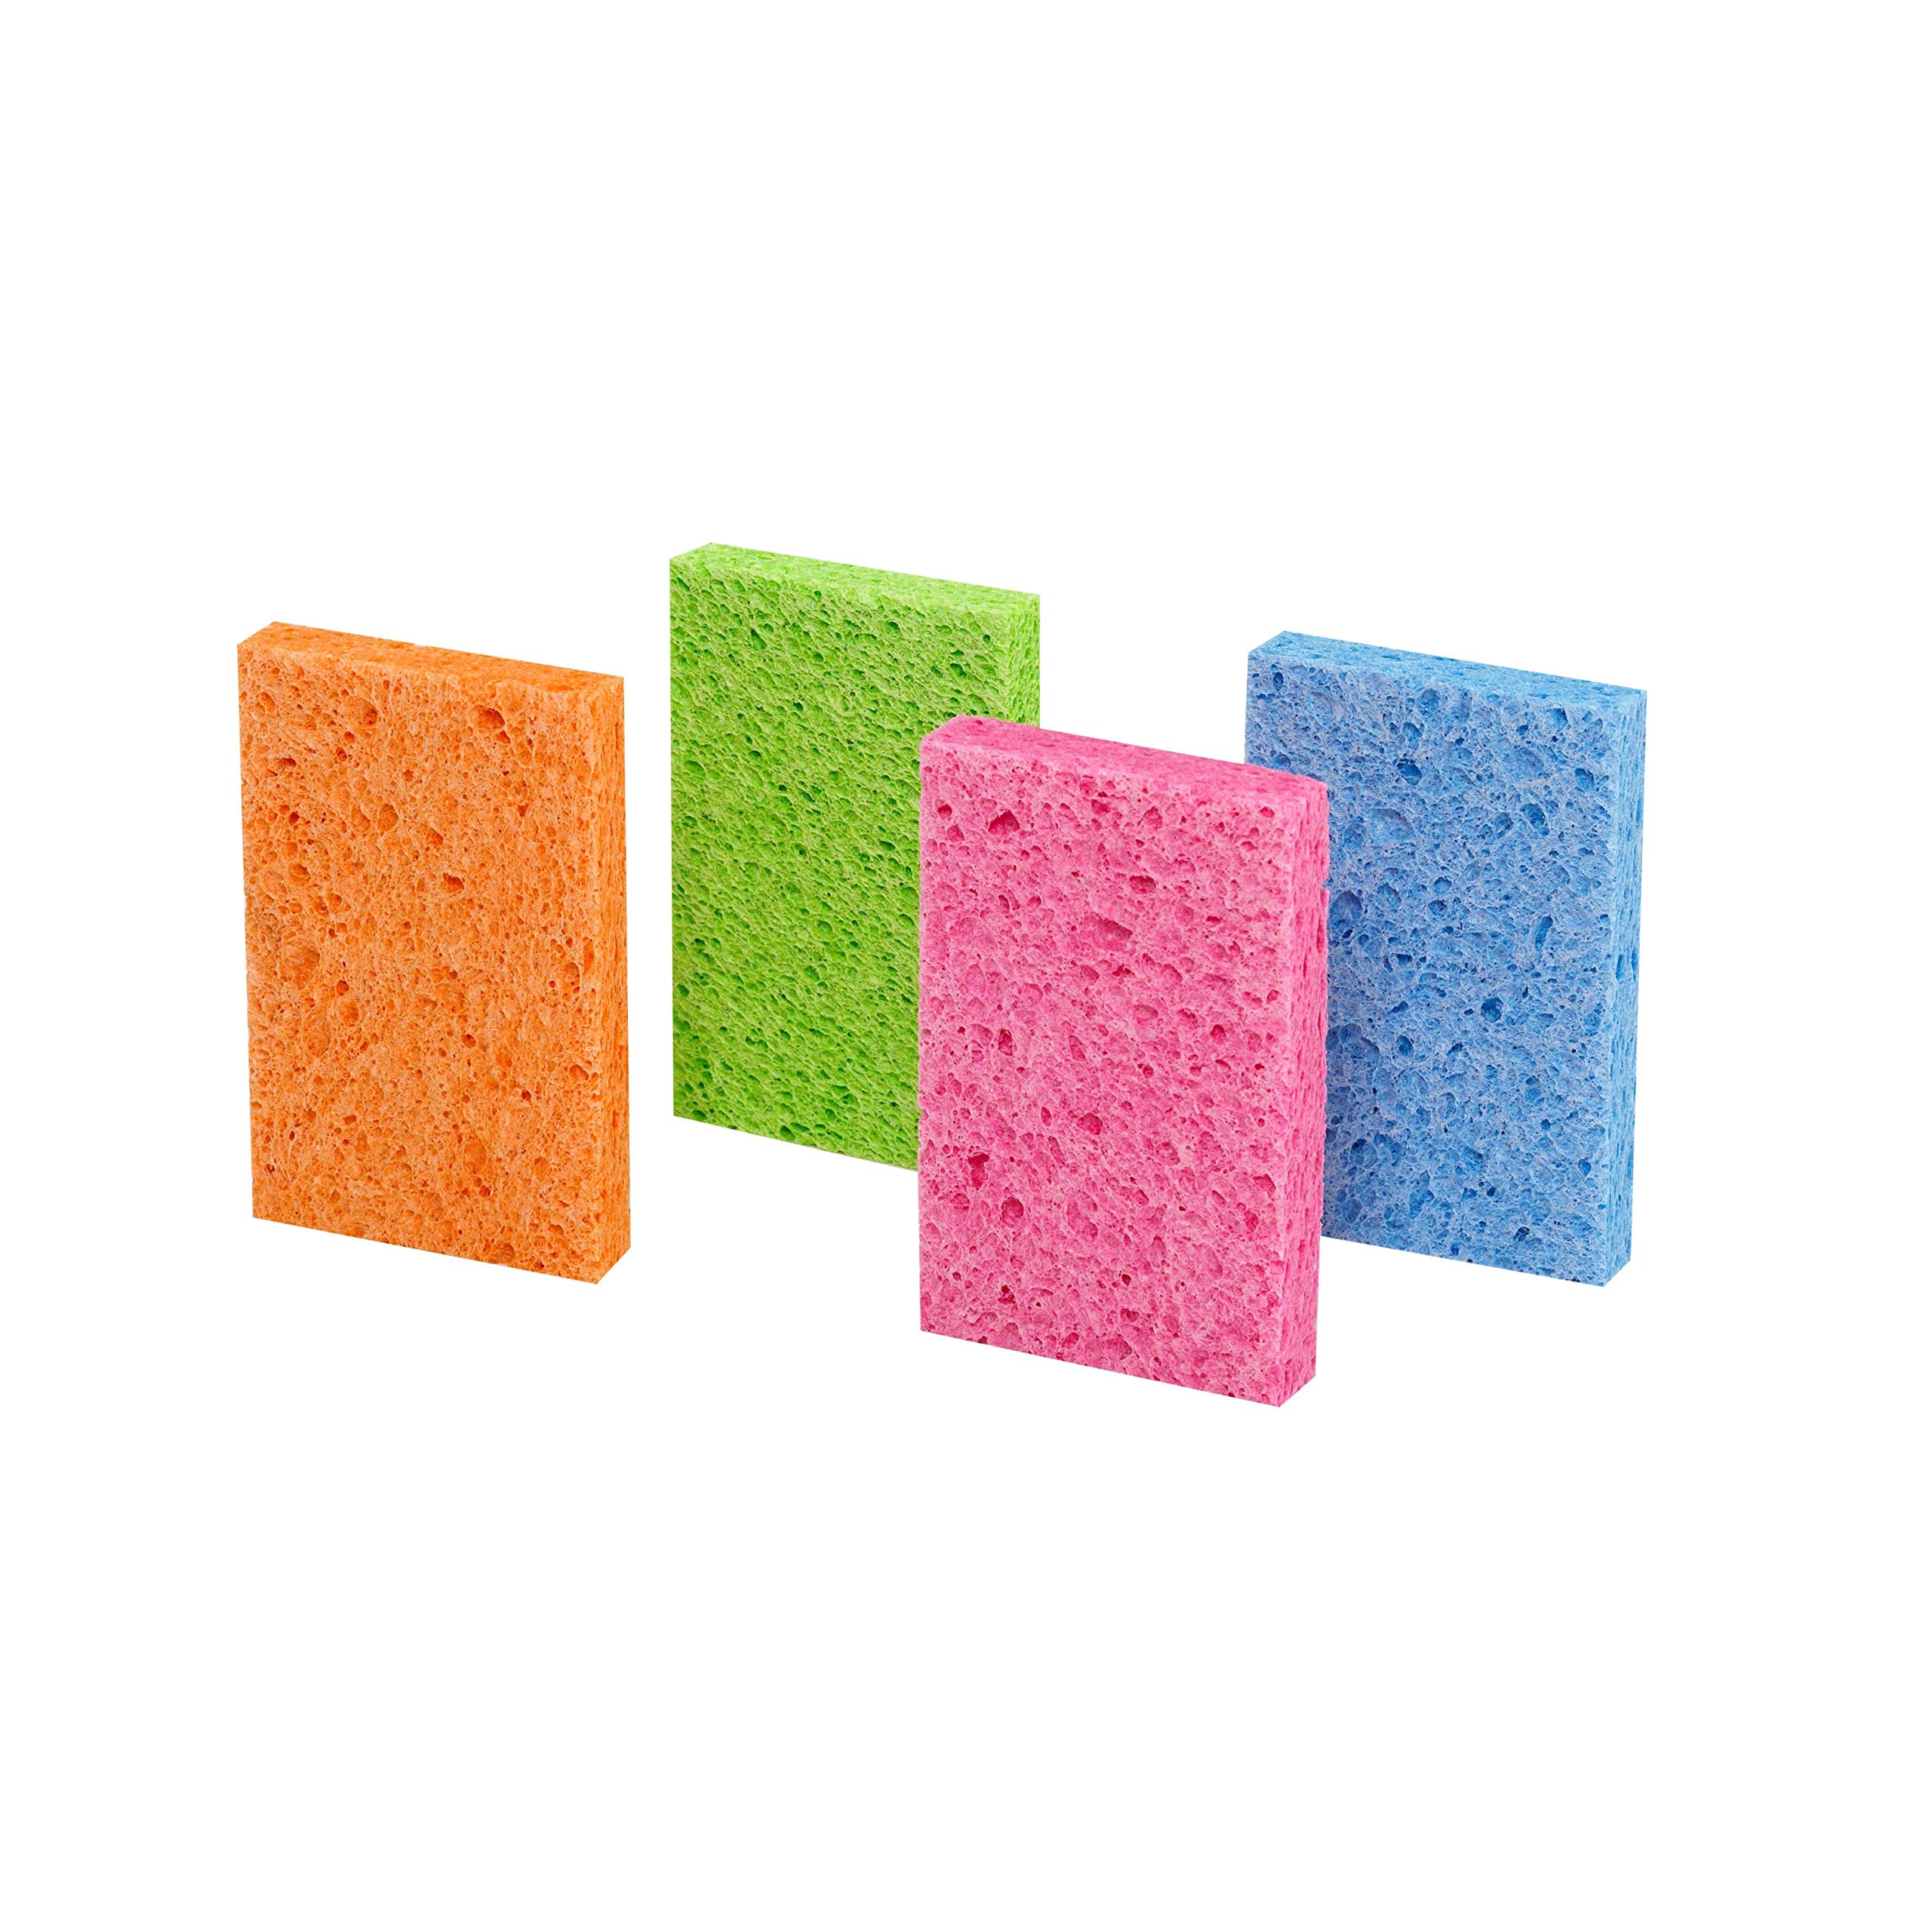 Scotch-Brite ocelo Multi-Purpose Handy Sponge, Assorted Colors, 40 Sponges